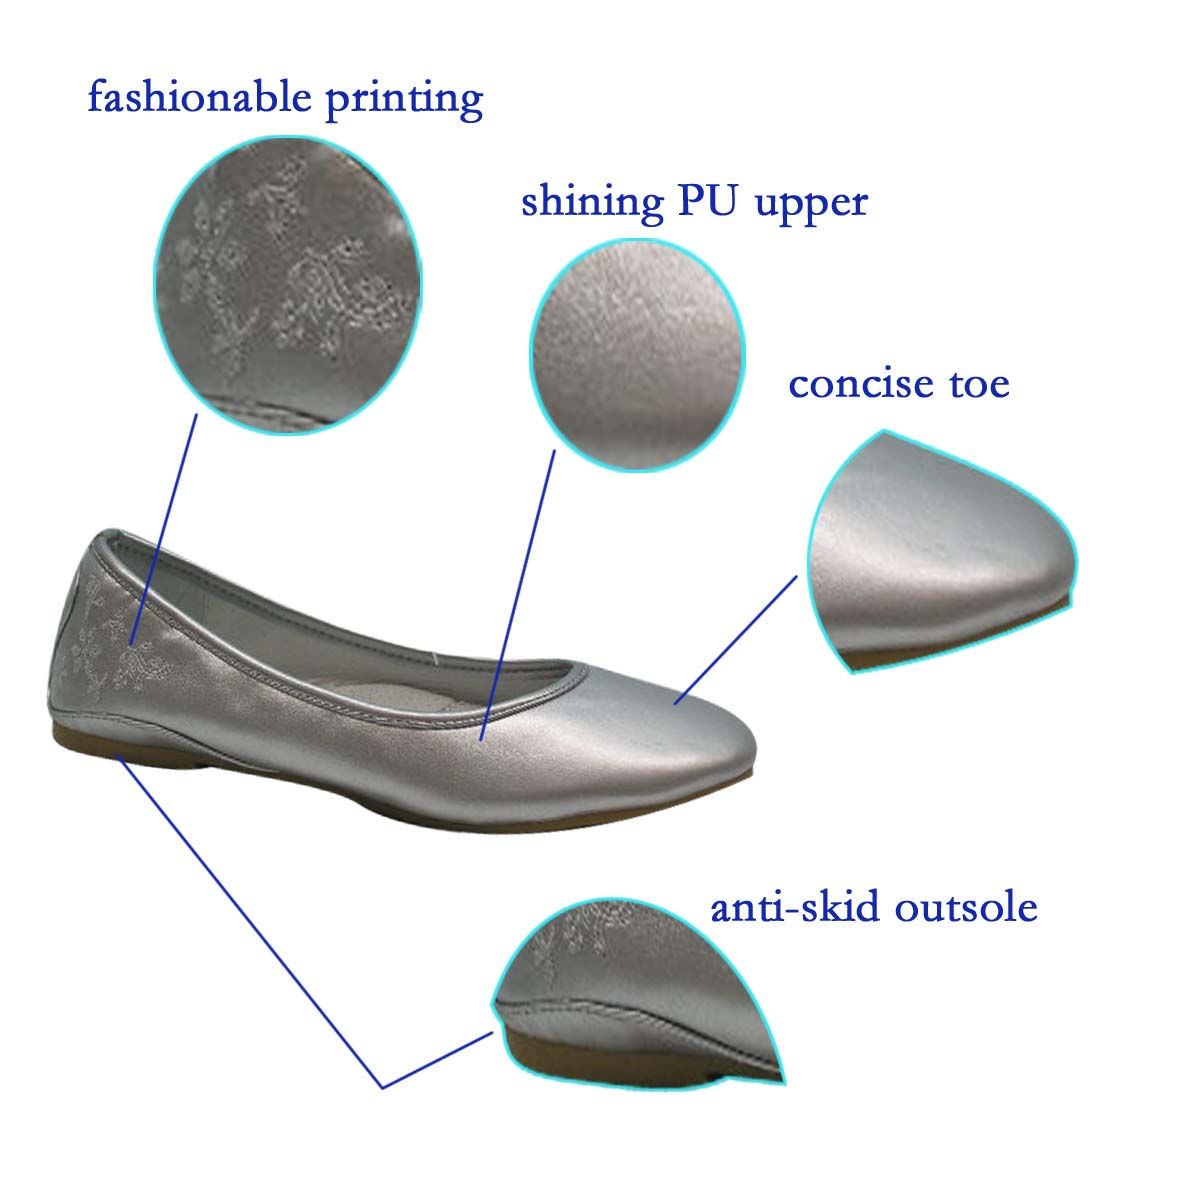 China High Quality New Design Popular Dancewear Silver Flat Ballet Dance Shoe Tap Character Dance Shoes